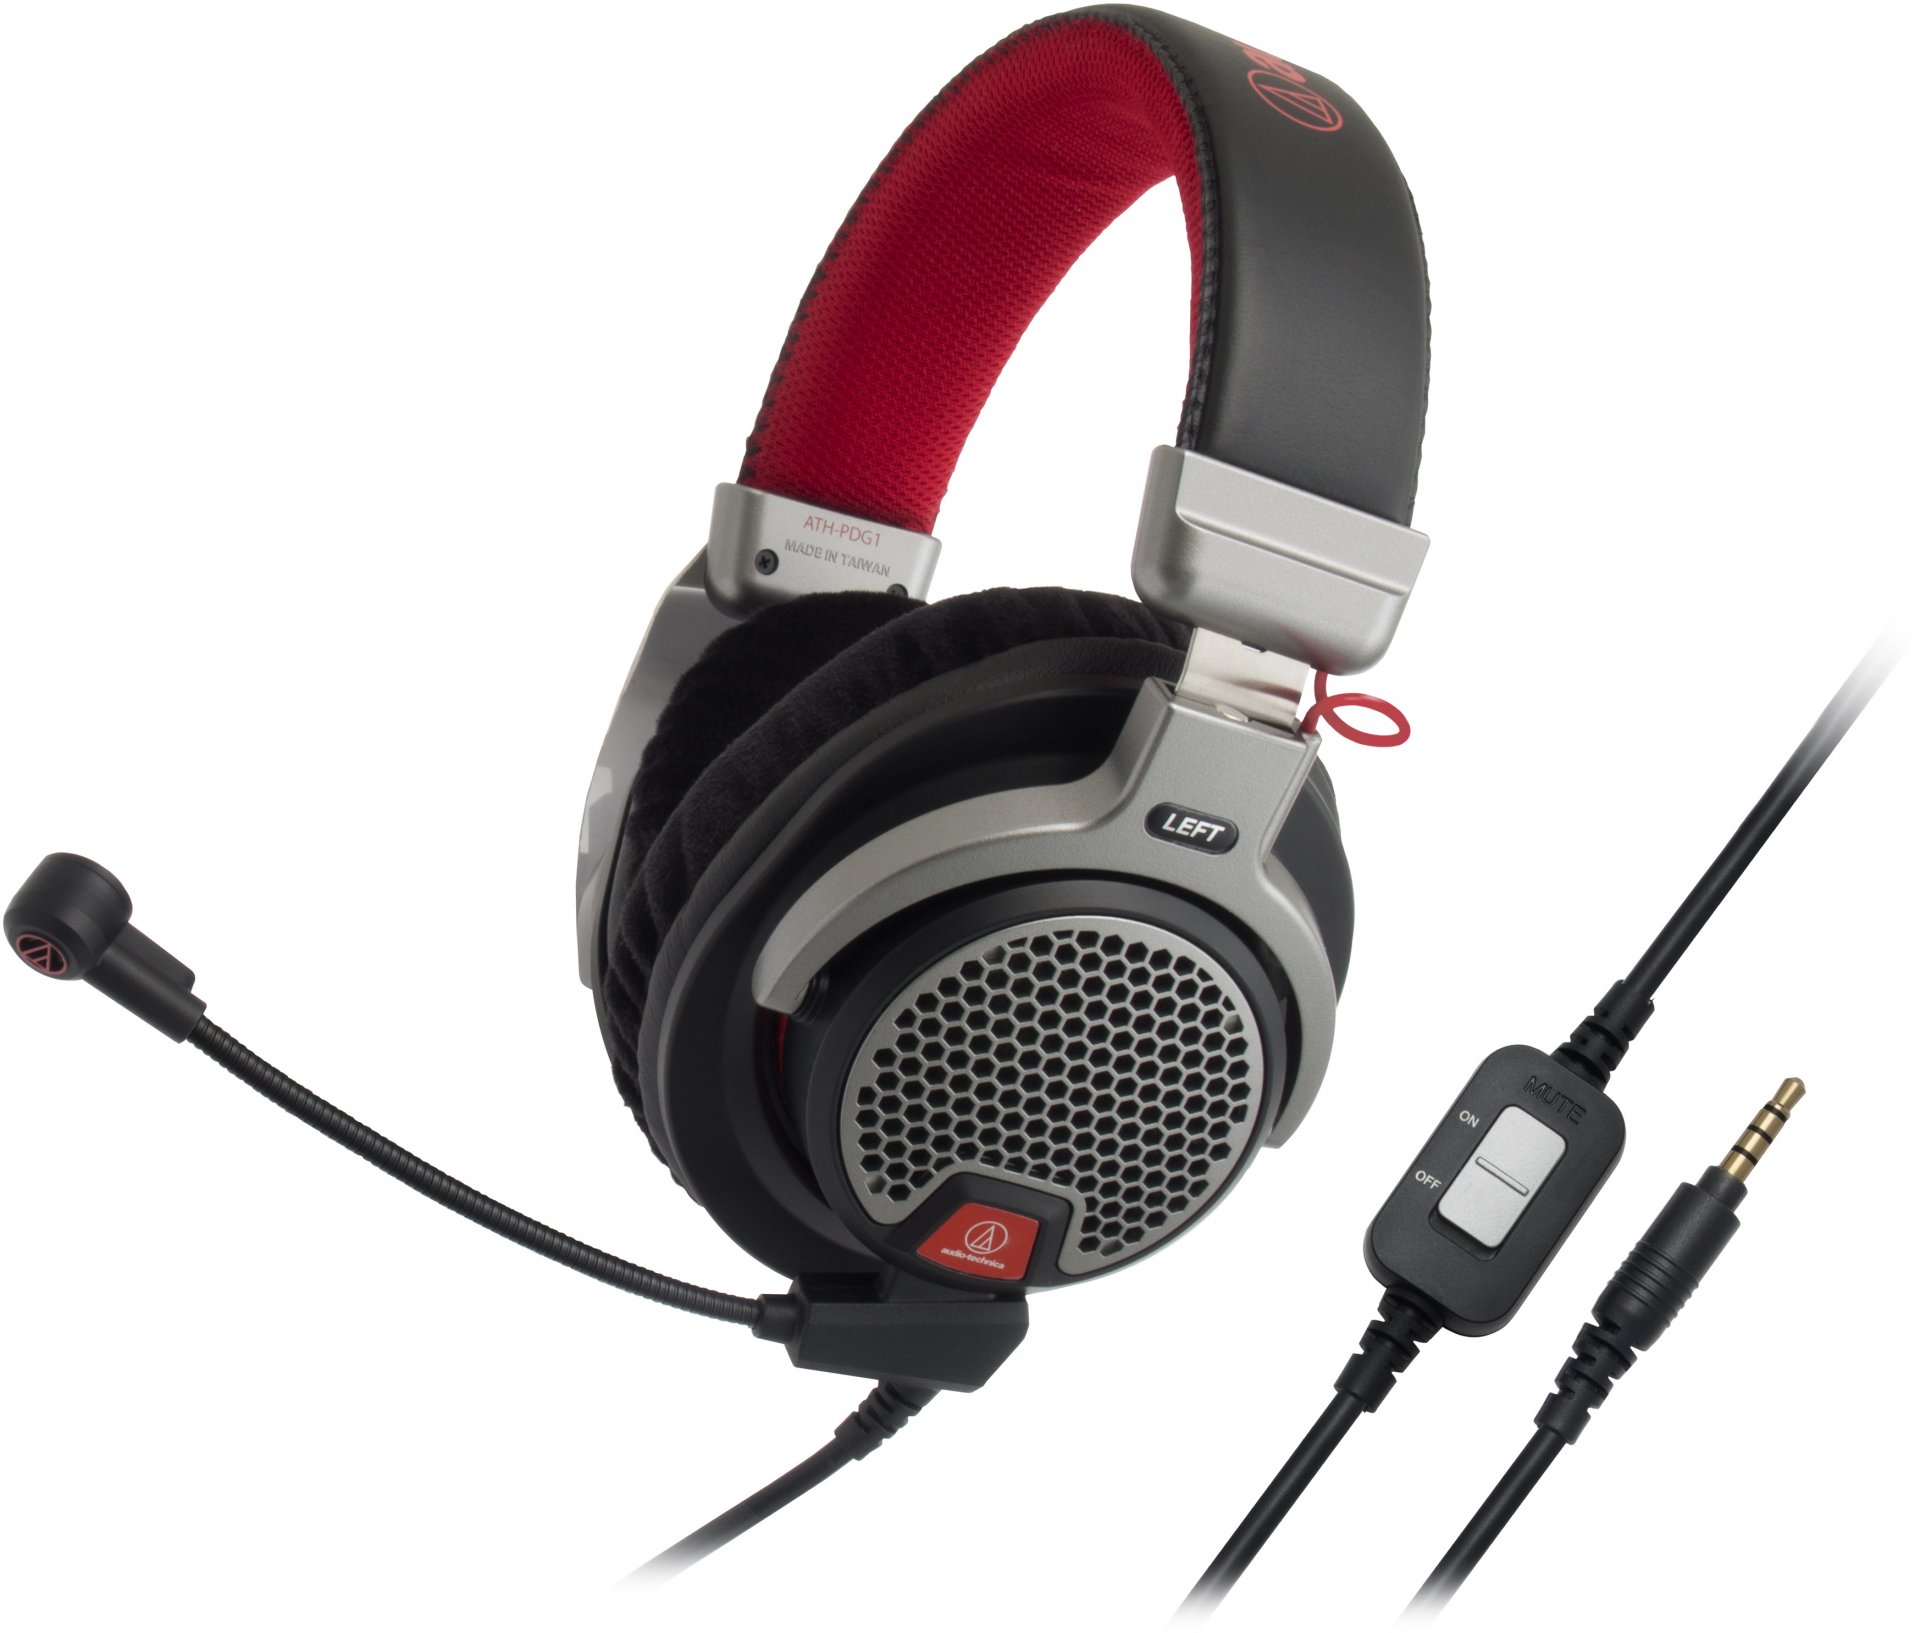 Audio-Technica ATH-PDG1a Premium Open-Air Headset.